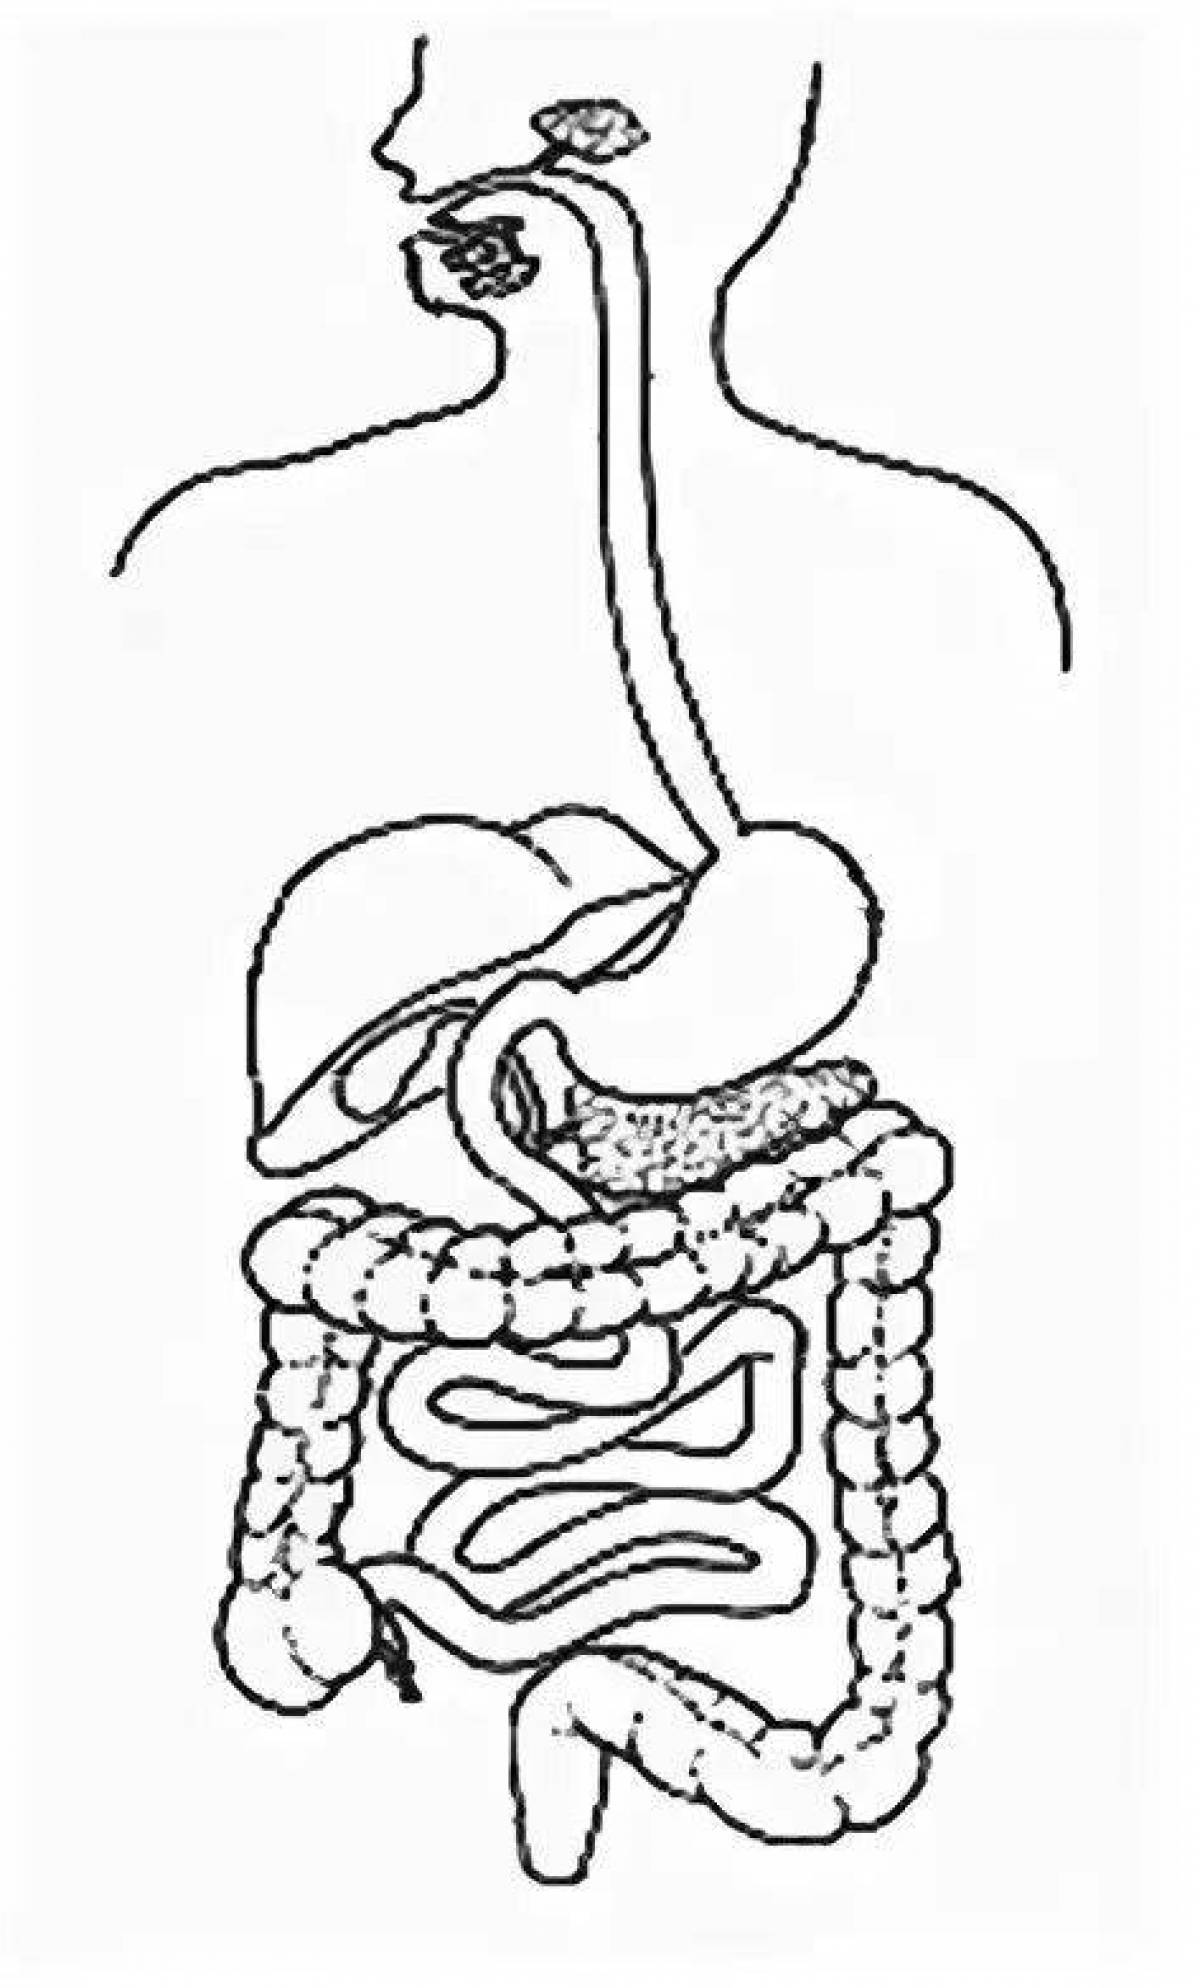 Human digestive system #1